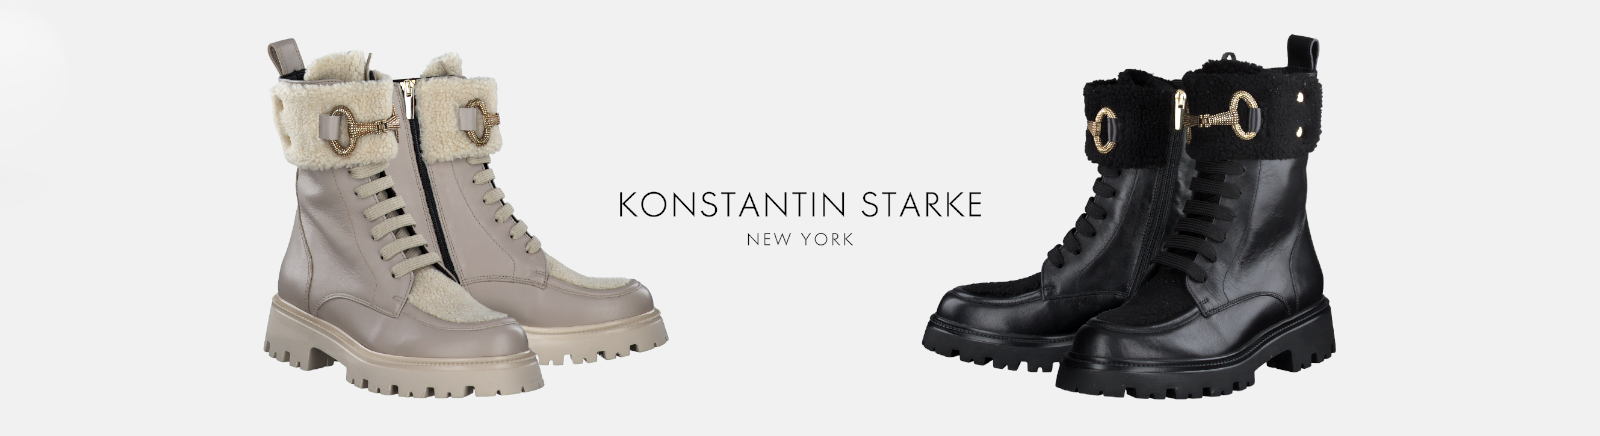 Juppen: Konstantin Starke Business Schuhe für Herren online shoppen